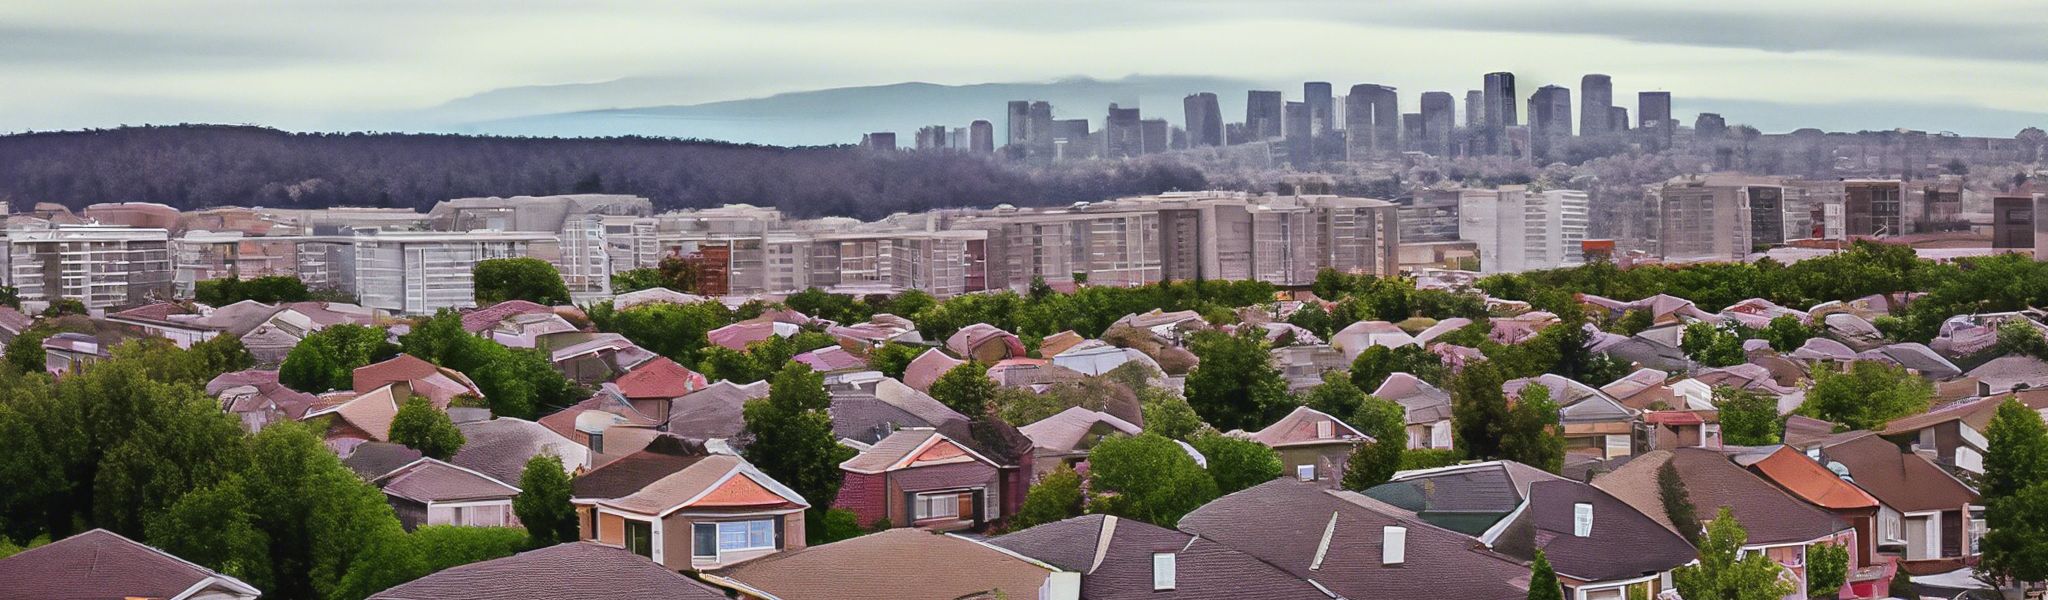 AI generated photo of an urban neighborhood